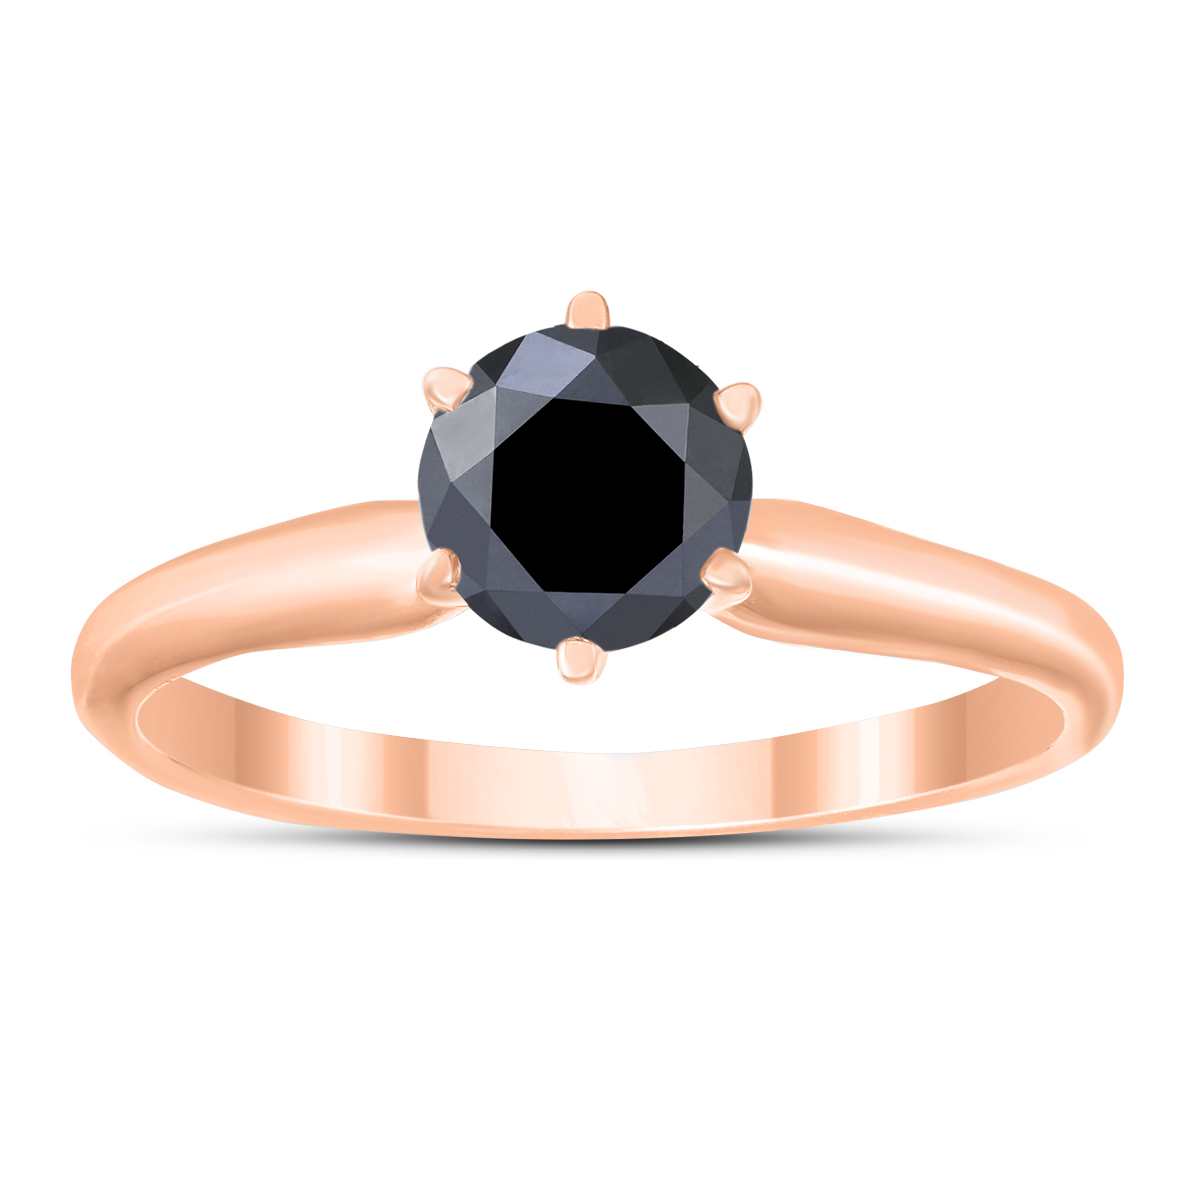 1/2 Carat Round Black Diamond Solitaire Ring in 14K Rose Gold